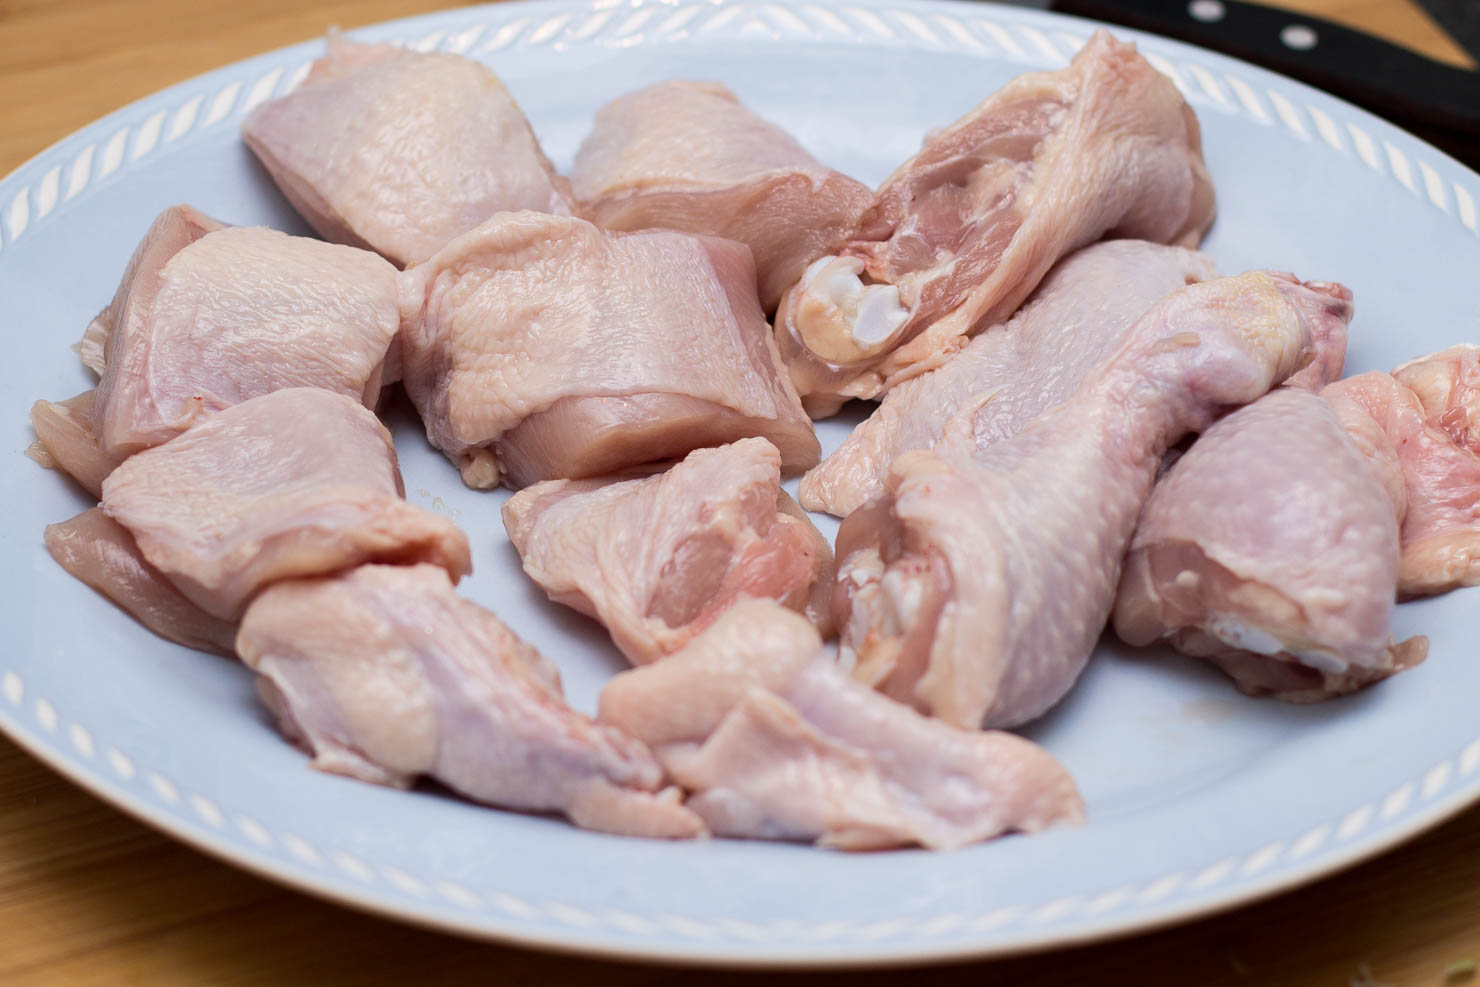 Delte kyllingstykker | Maqluba "opp ned" kylling | #CookForSYRIA